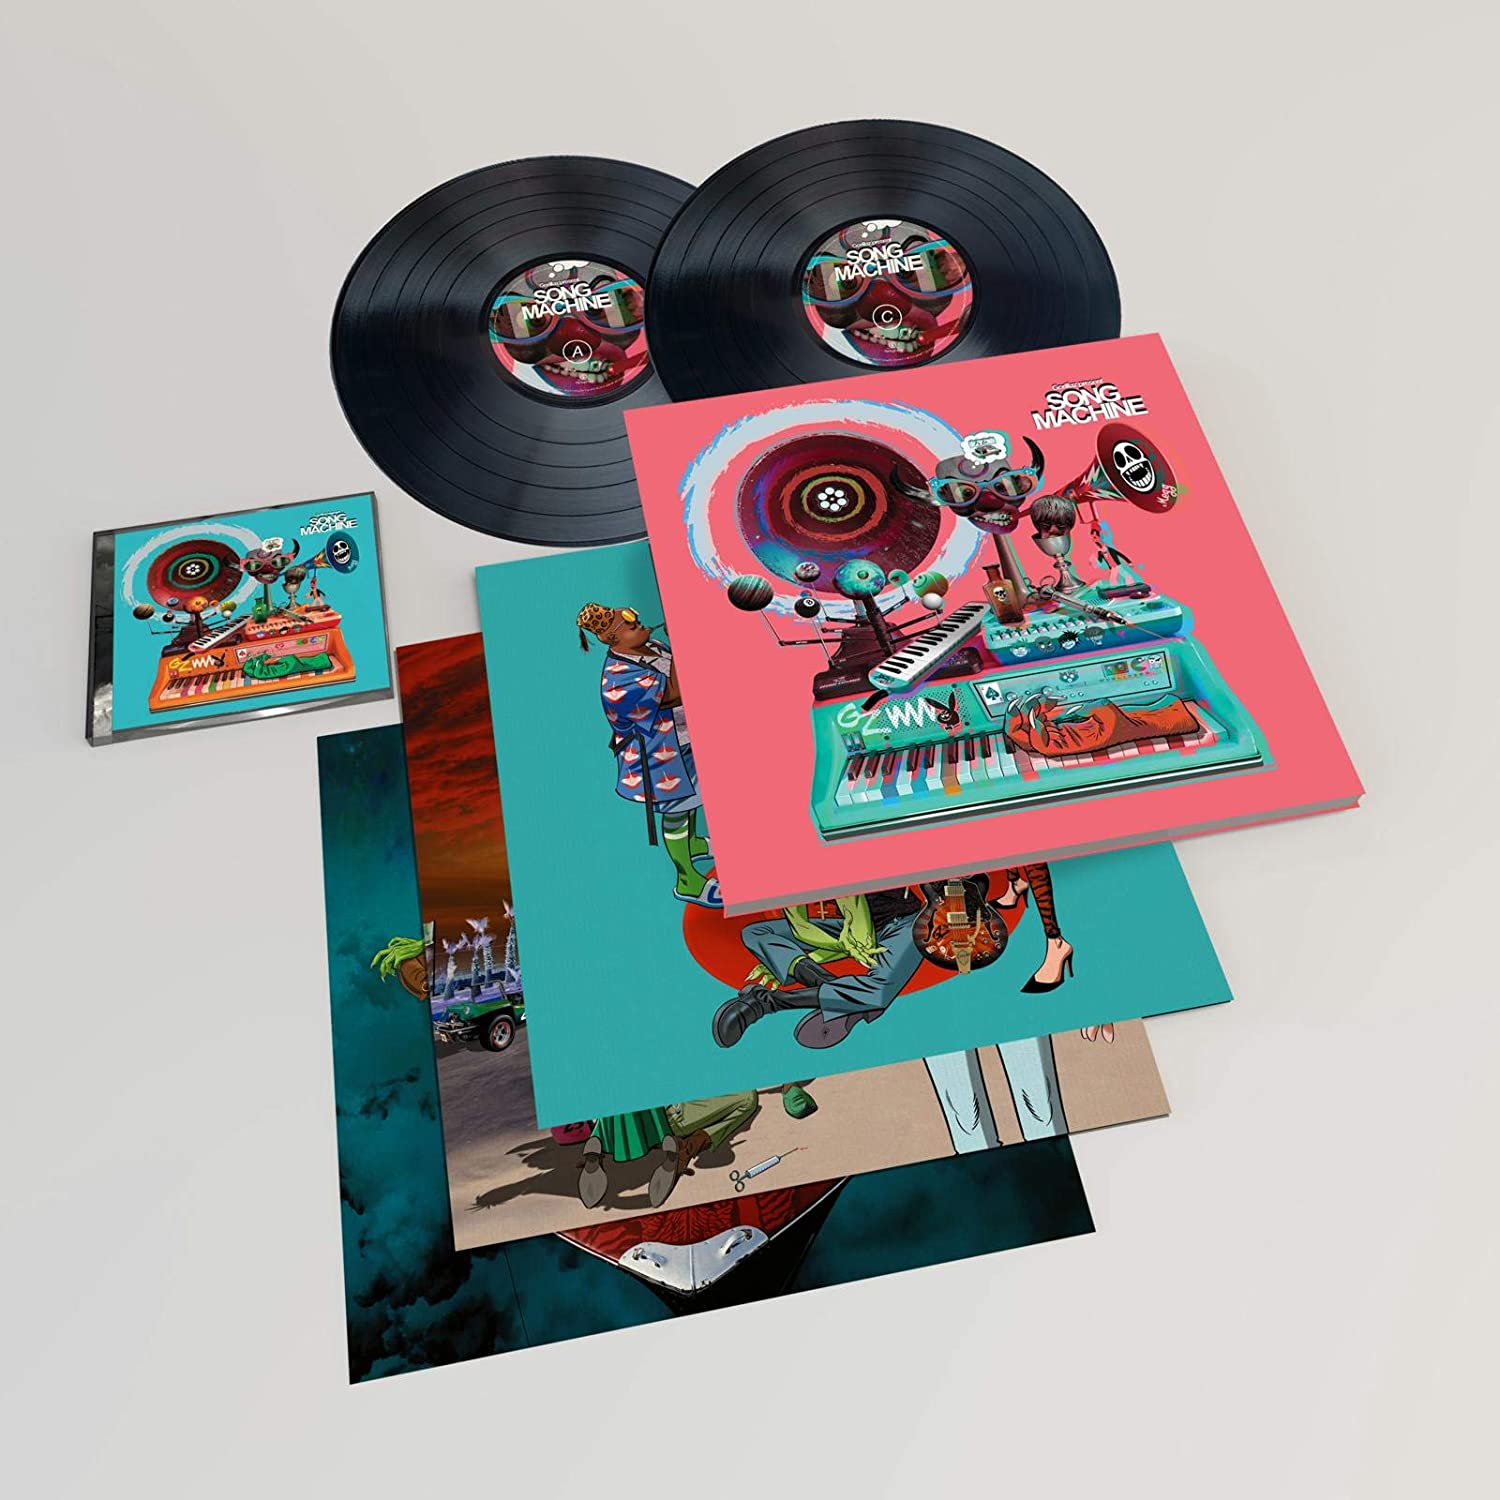 Gorillaz – Song Machine, Season One – Deluxe LP